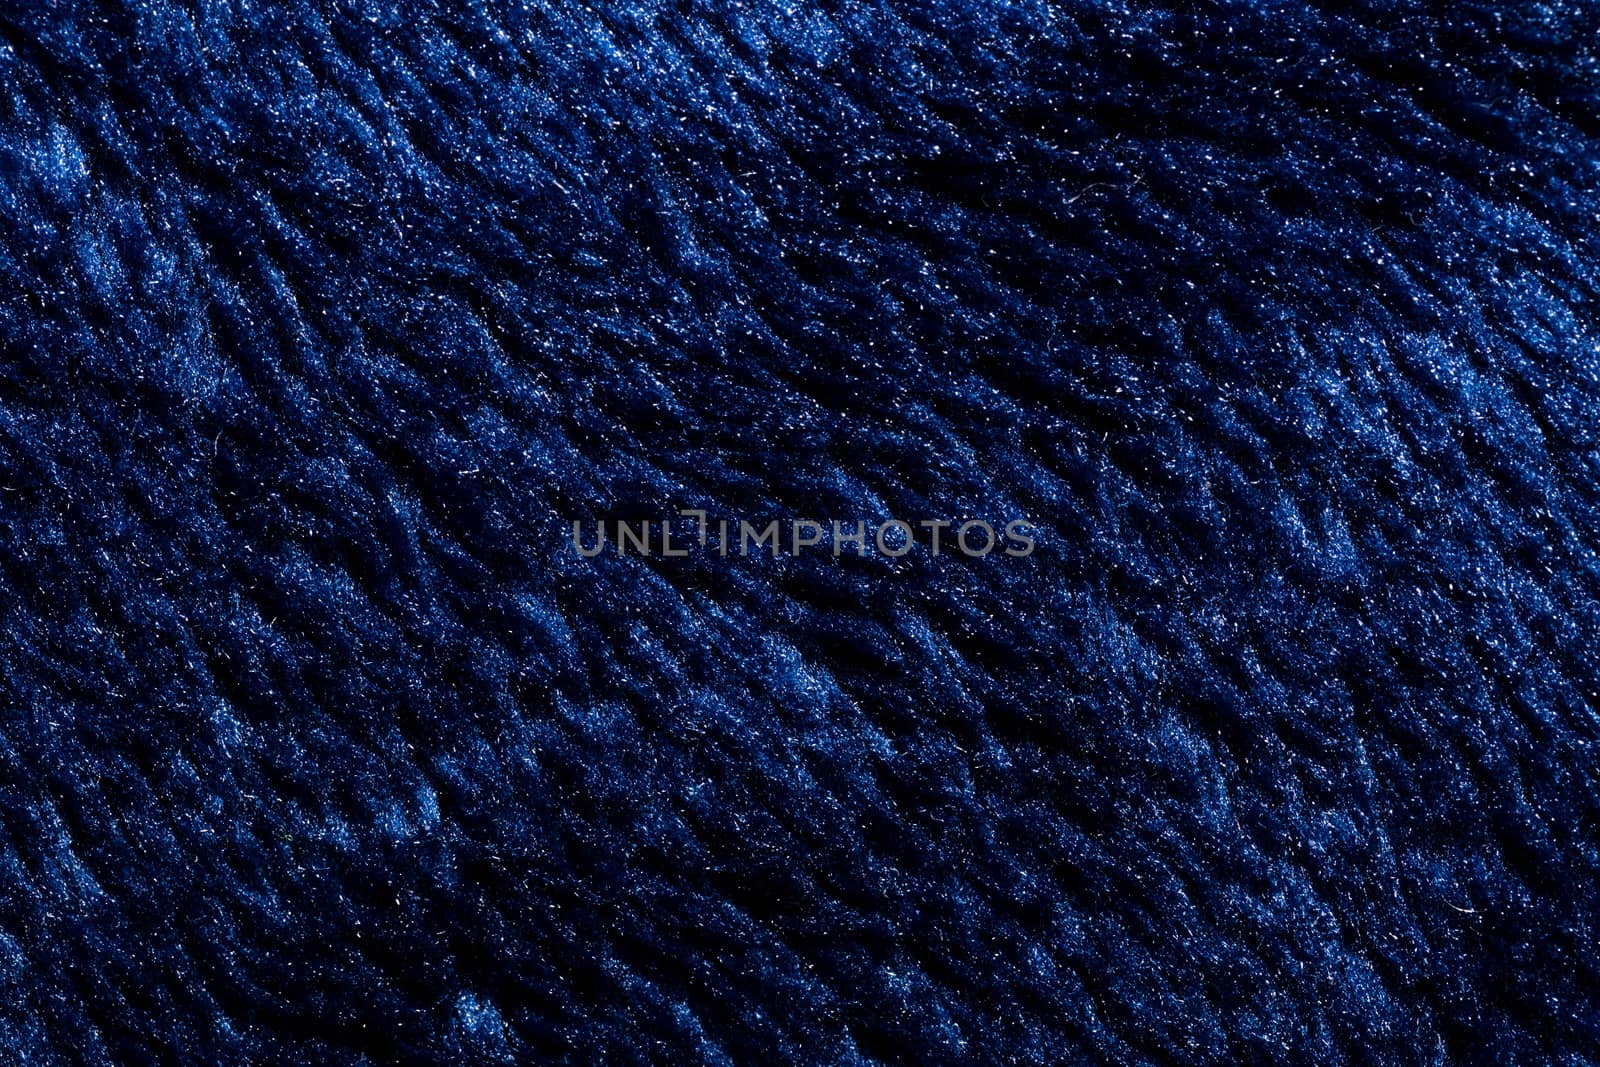 Close-up view of a piece of dark blue fabric by DamantisZ